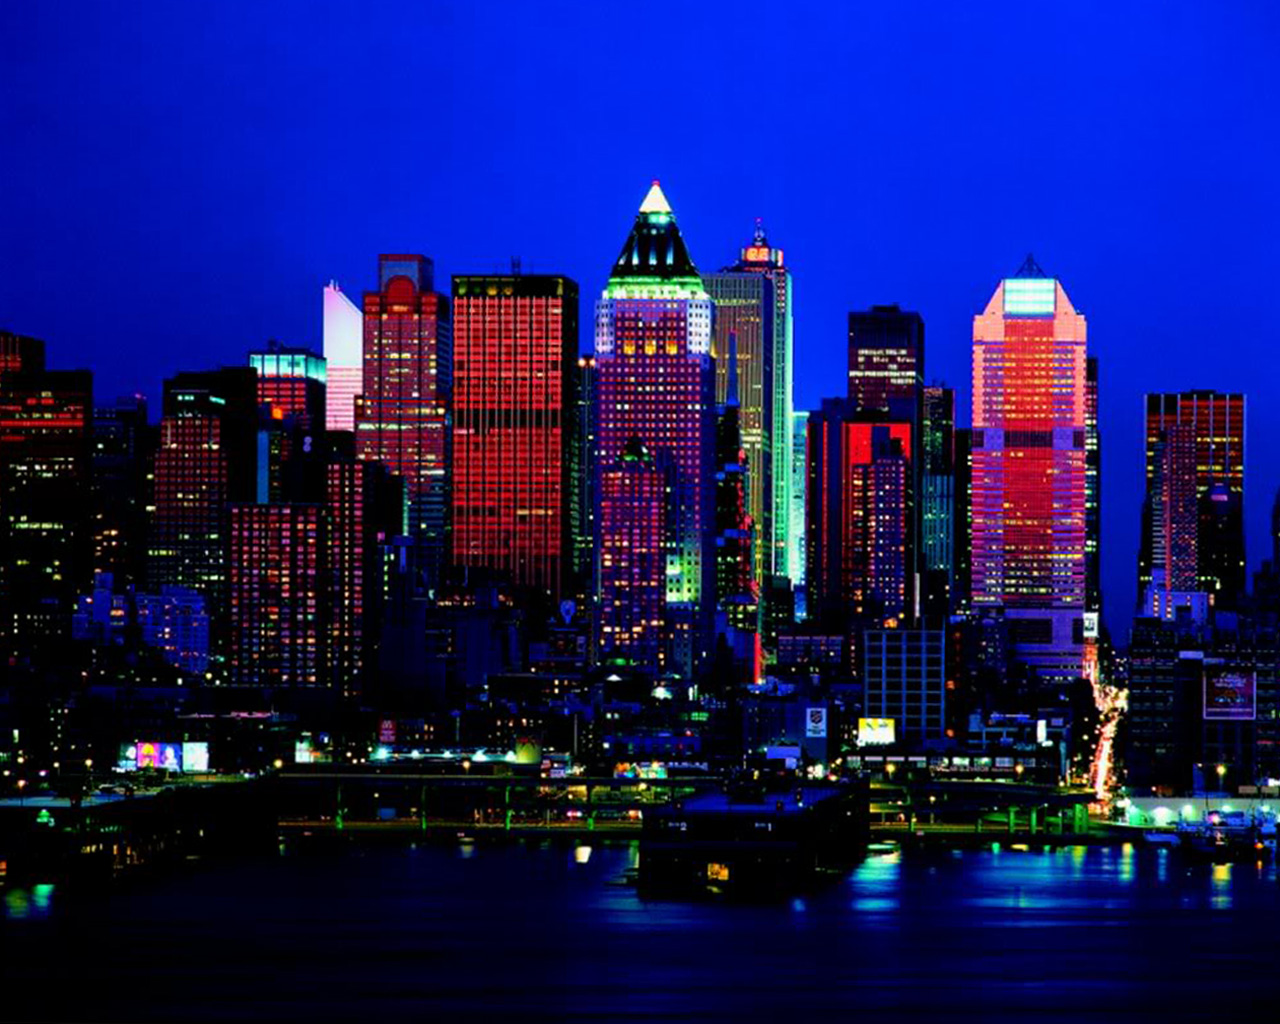 New York City Night Skyline Wallpaper   1280x1024 iWallHD   Wallpaper